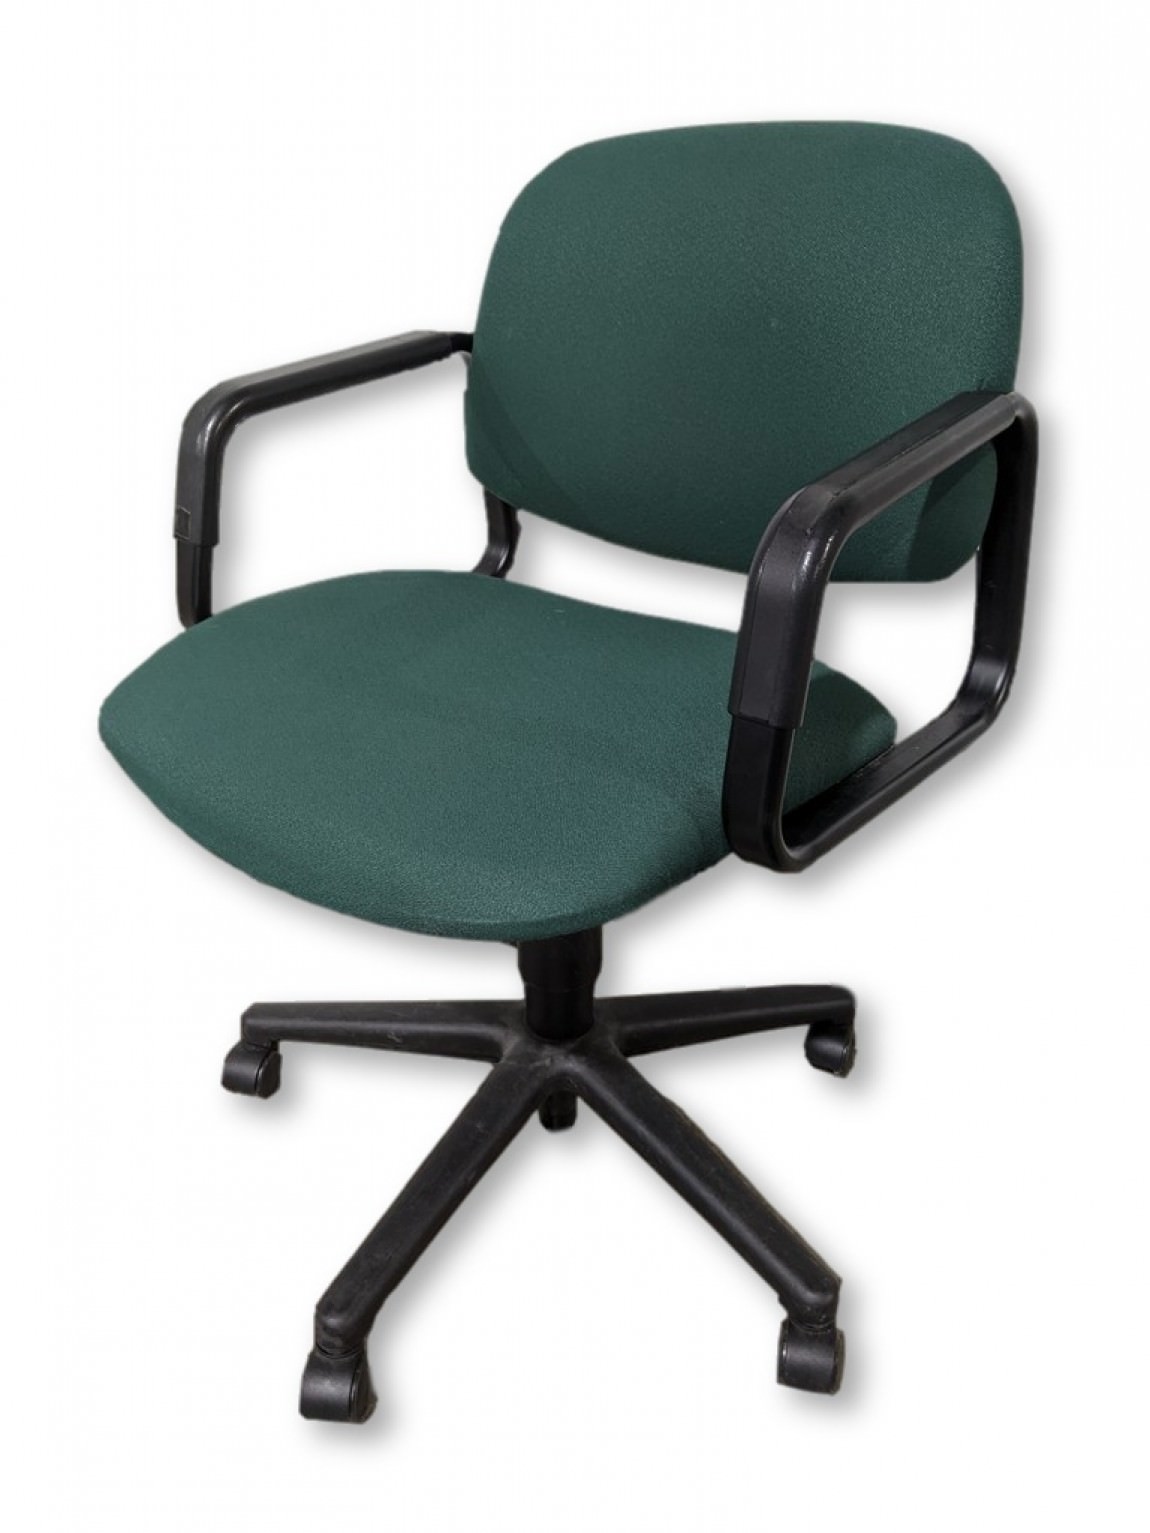 Hon Green Fabric Rolling Swivel Chairs  